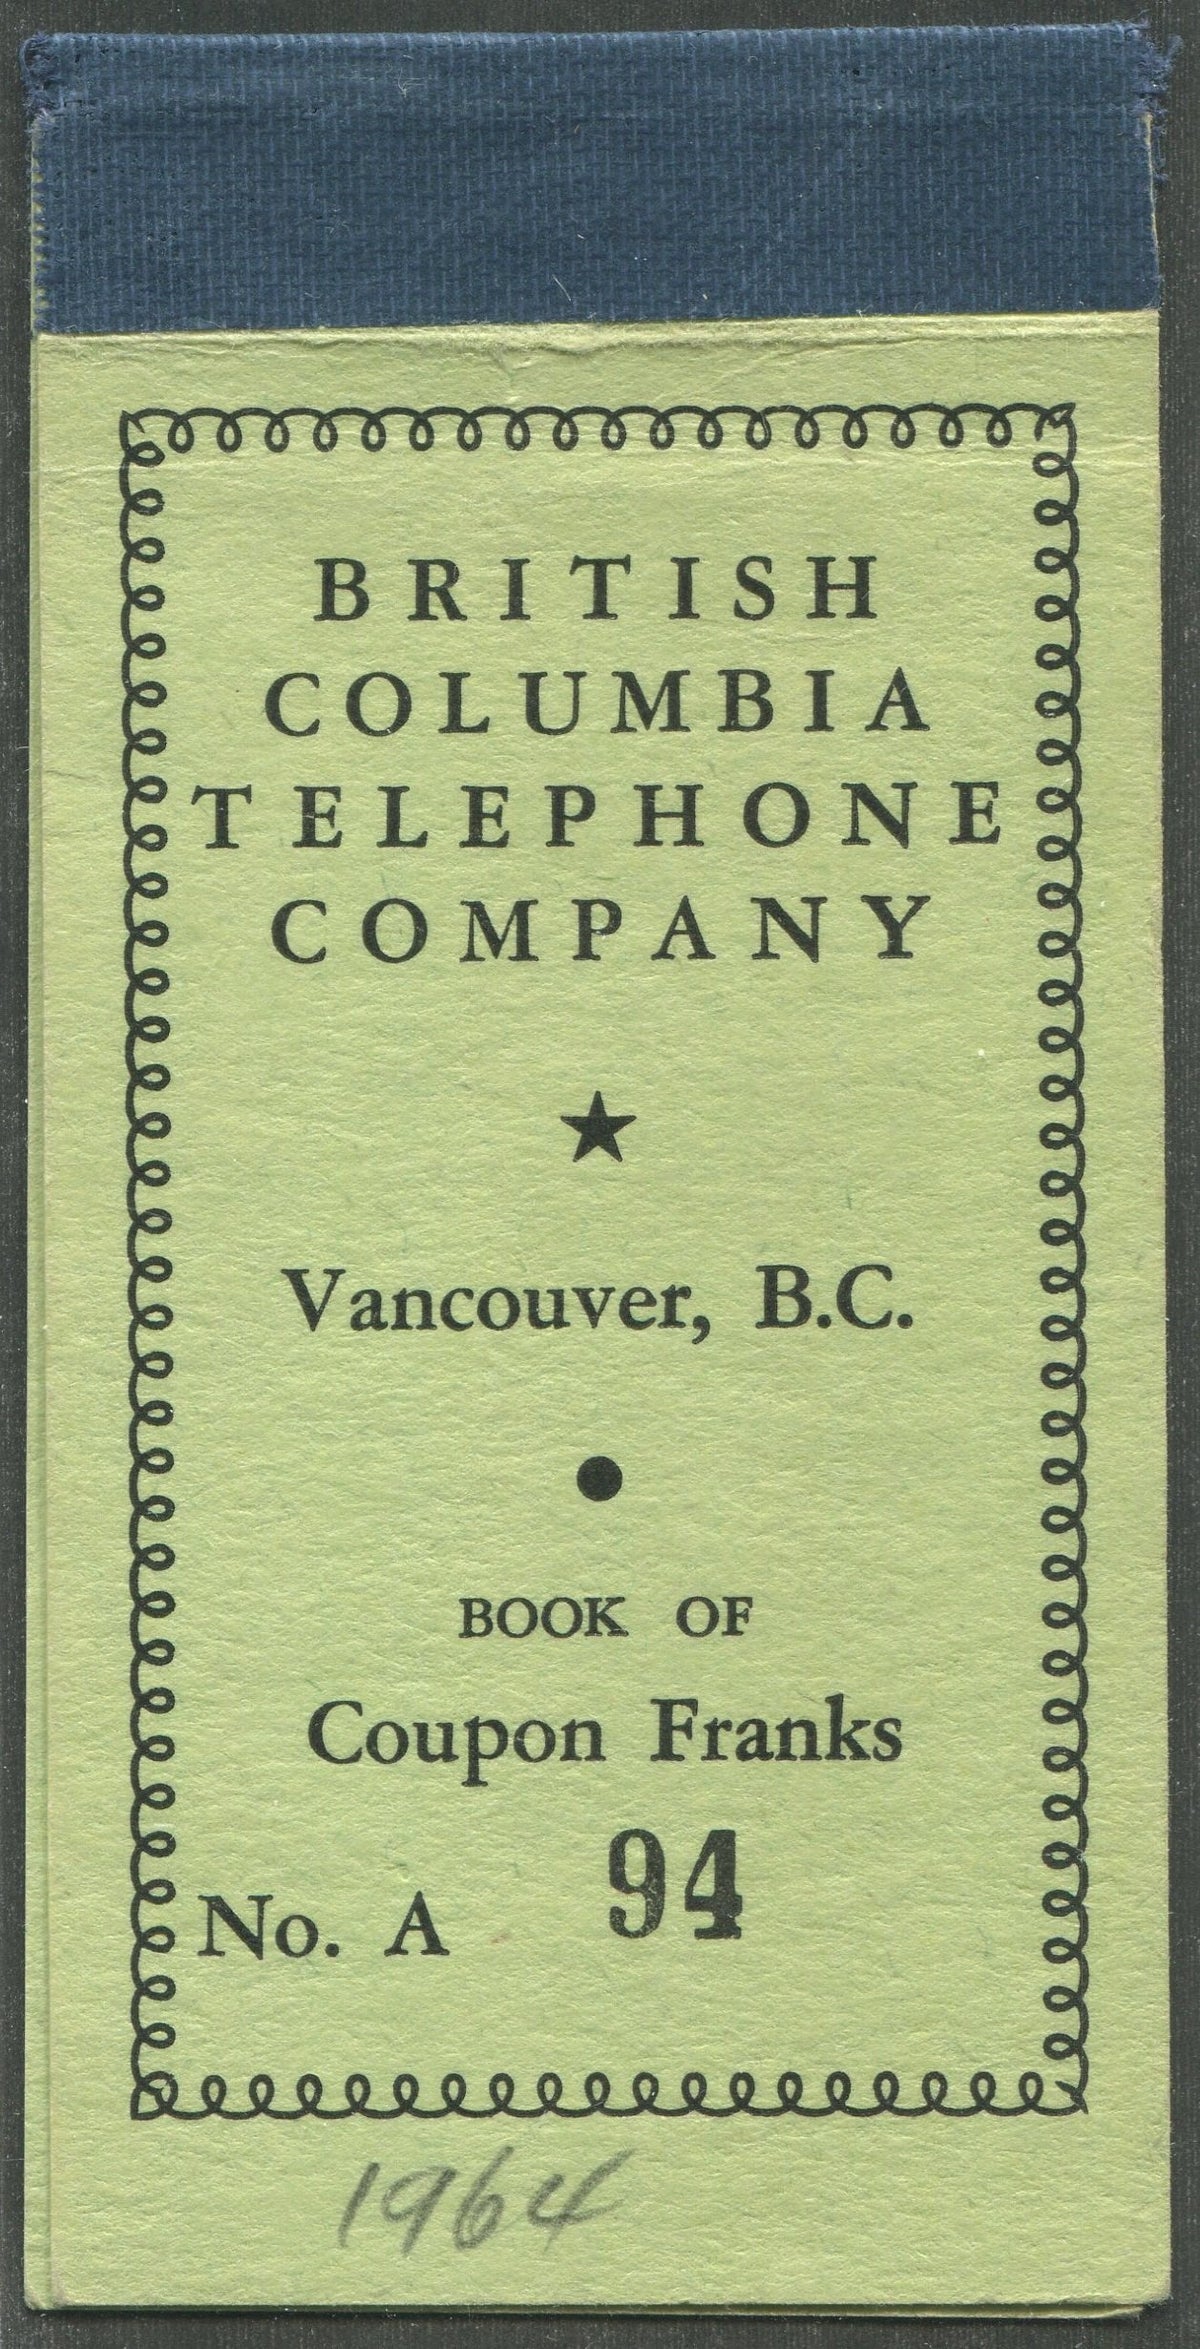 0300BC1708 - BCT202, BCT203, BCT204 - 1964 Booklet